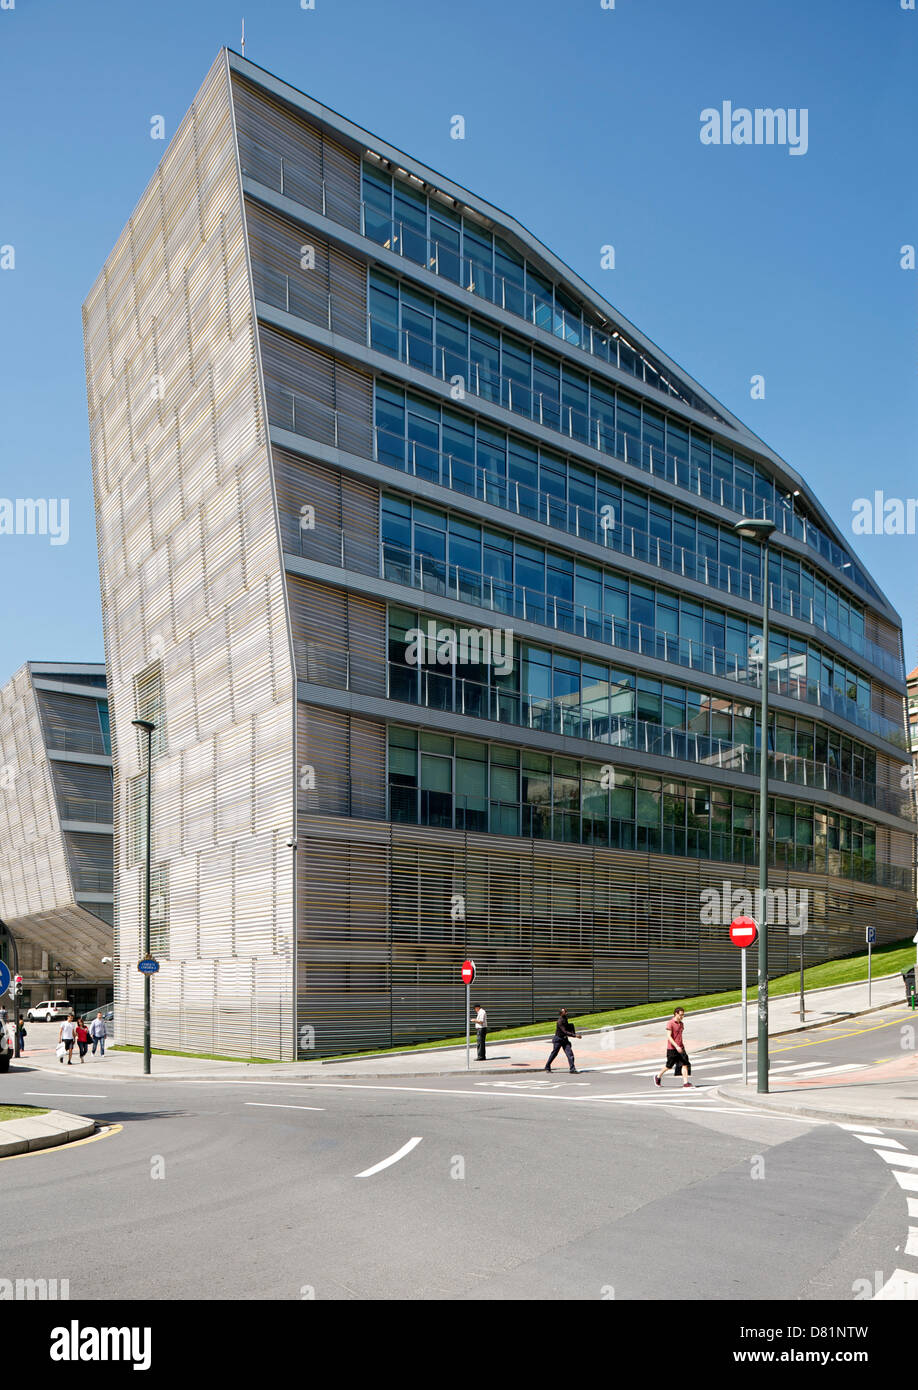 Bilbao City Council, Bilbao, Spain. Architect: IMB Arquitectos , 2010. General exterior view of new bulding. Stock Photo